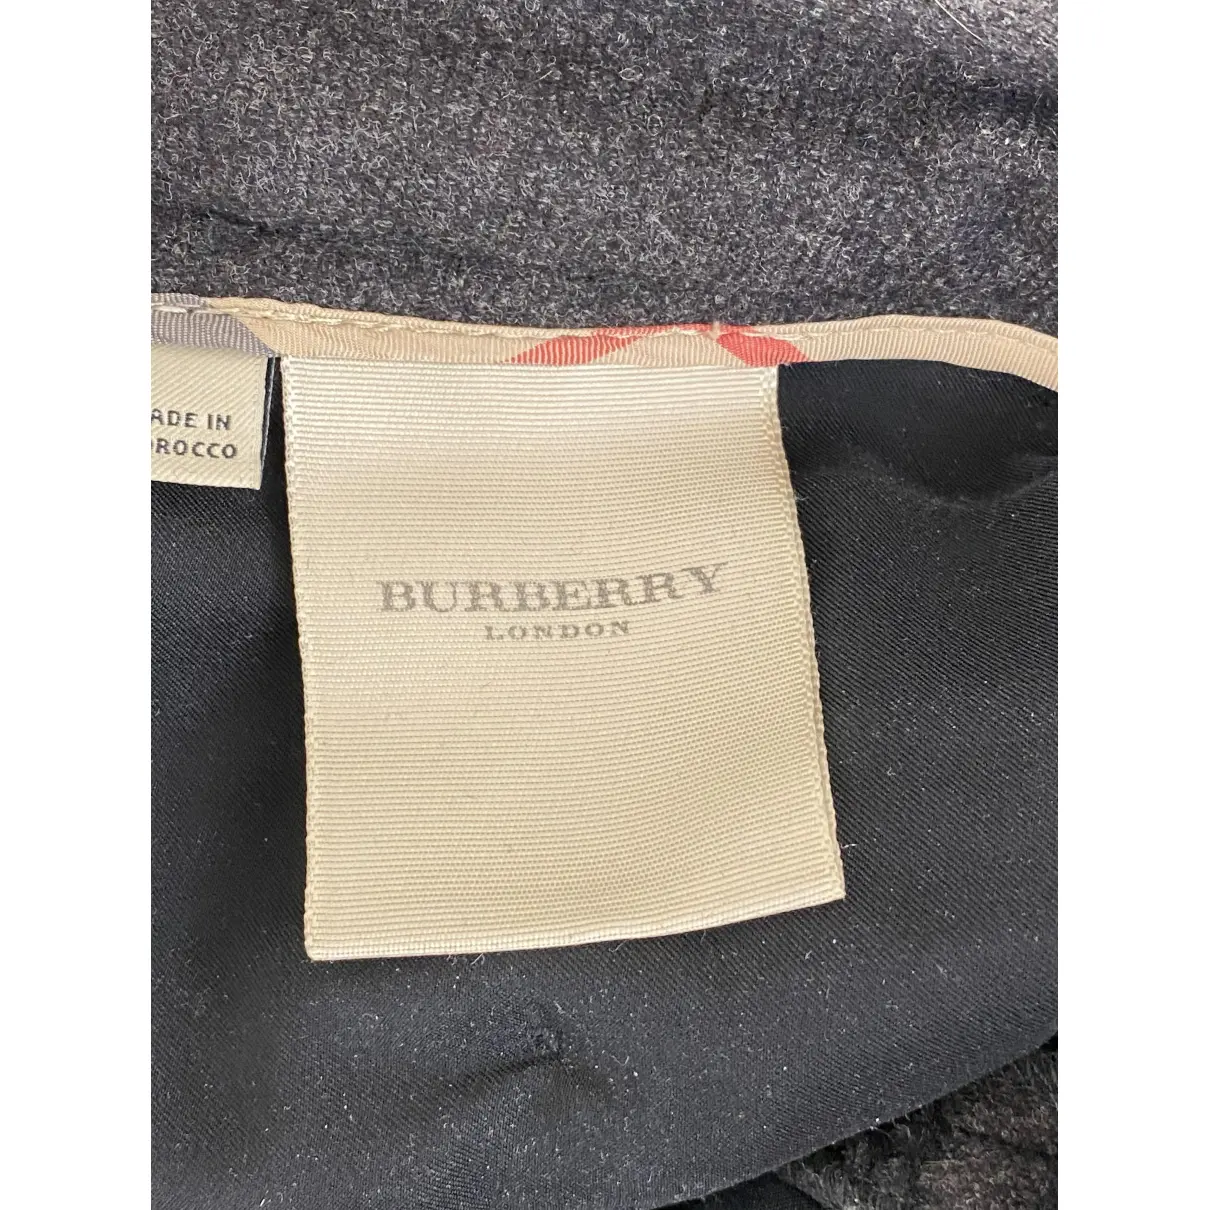 Buy Burberry Wool straight pants online